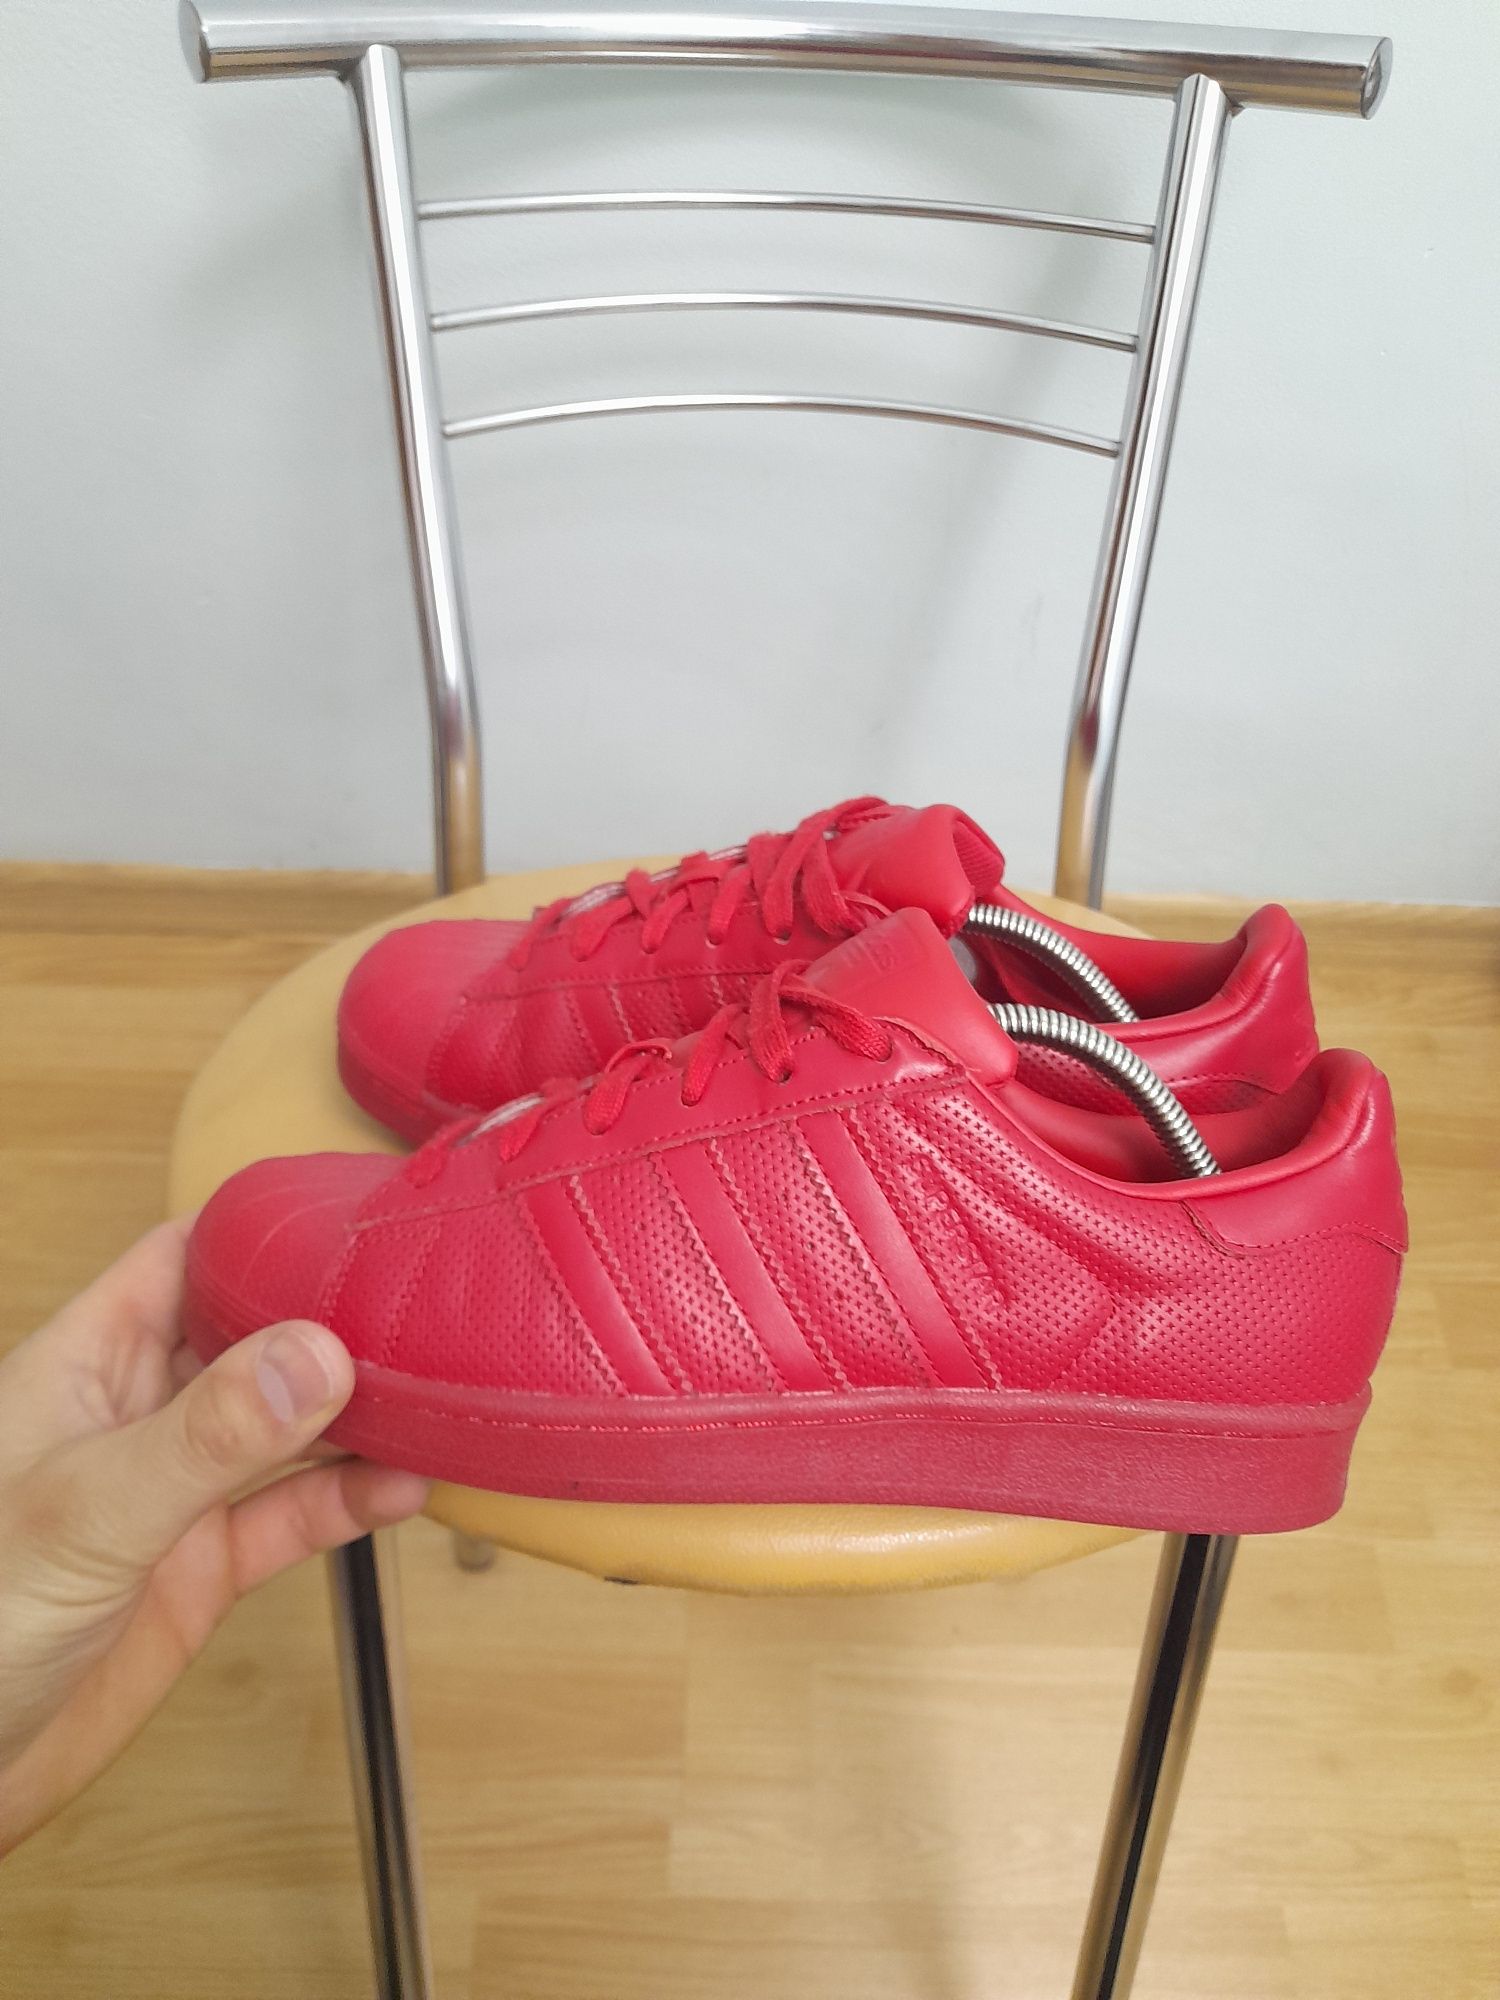 Кроссовки Adidas x Pharrell Superstar Supercolor "red" розмір 39 довж